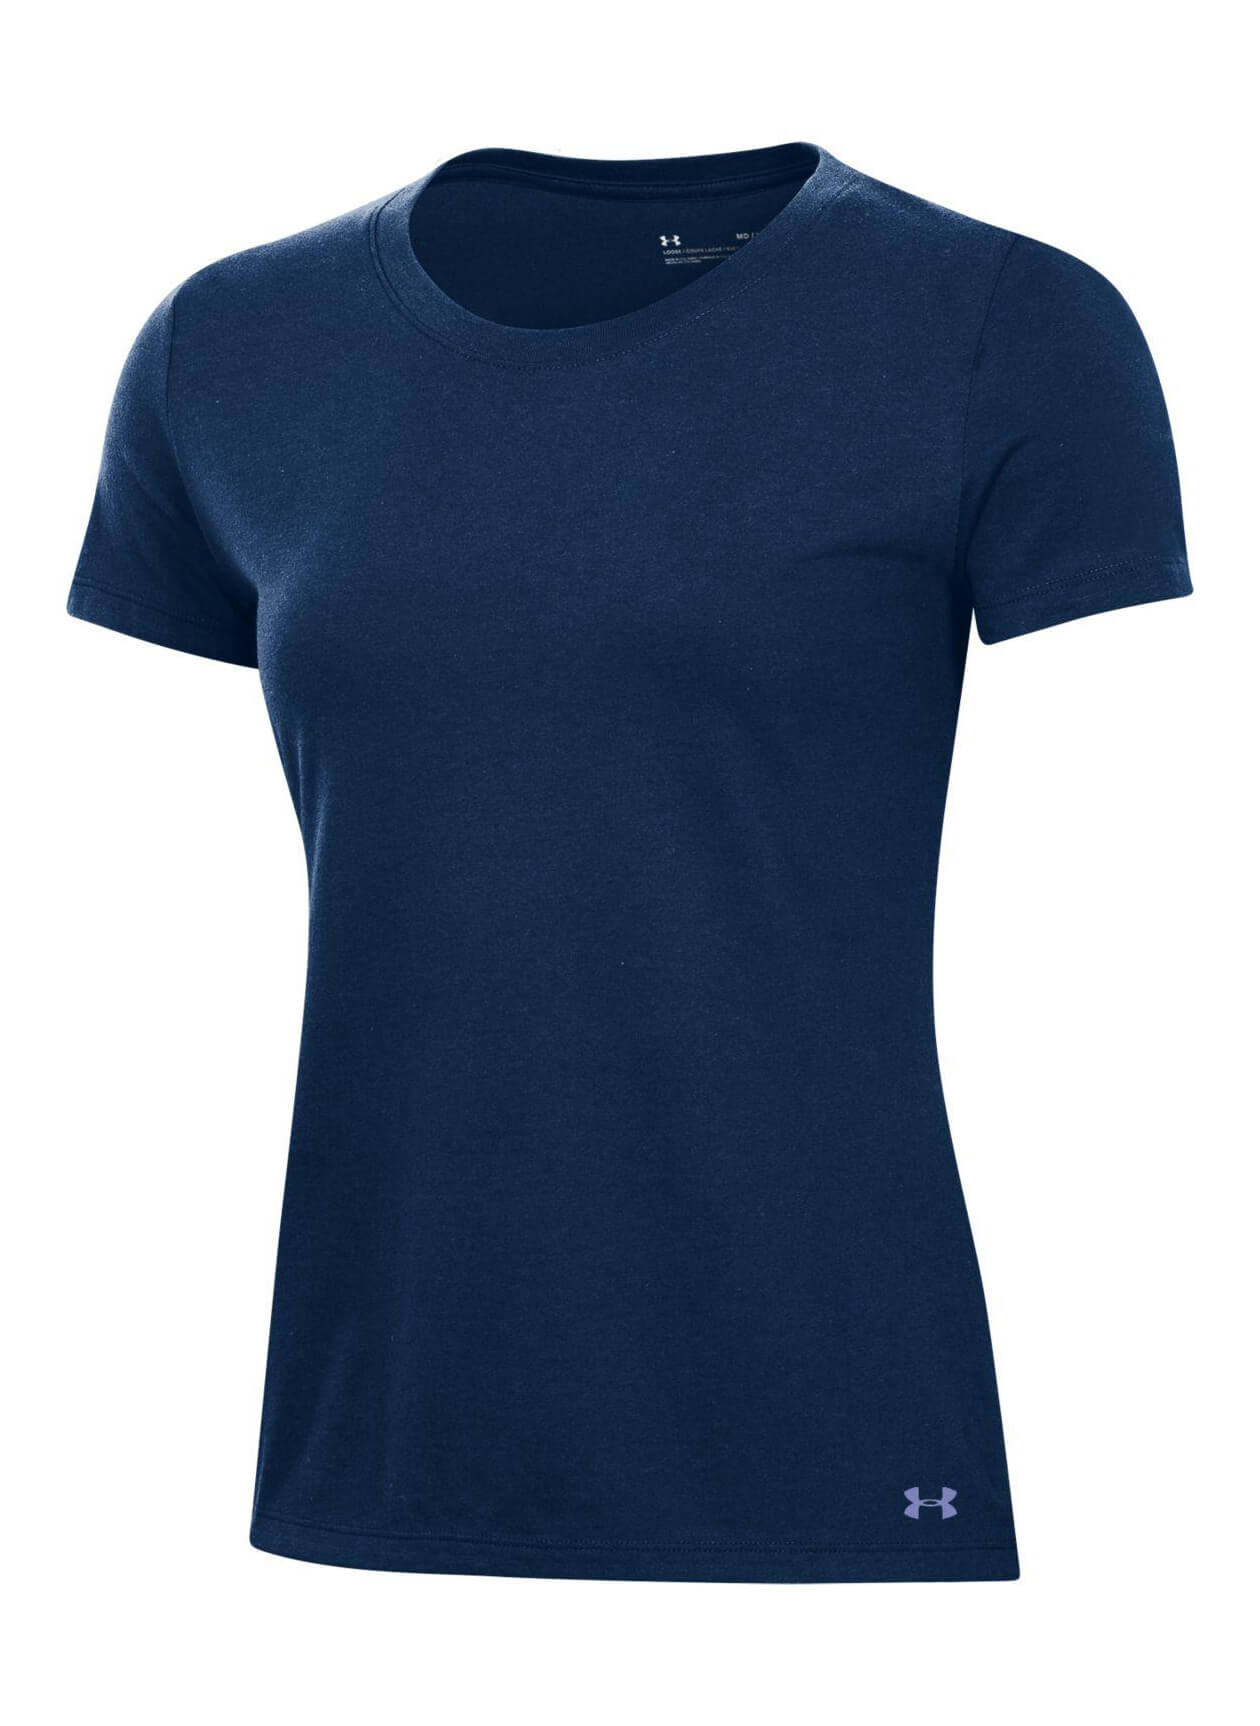 Under Armour UW0848 - Women's Cotton T-Shirt